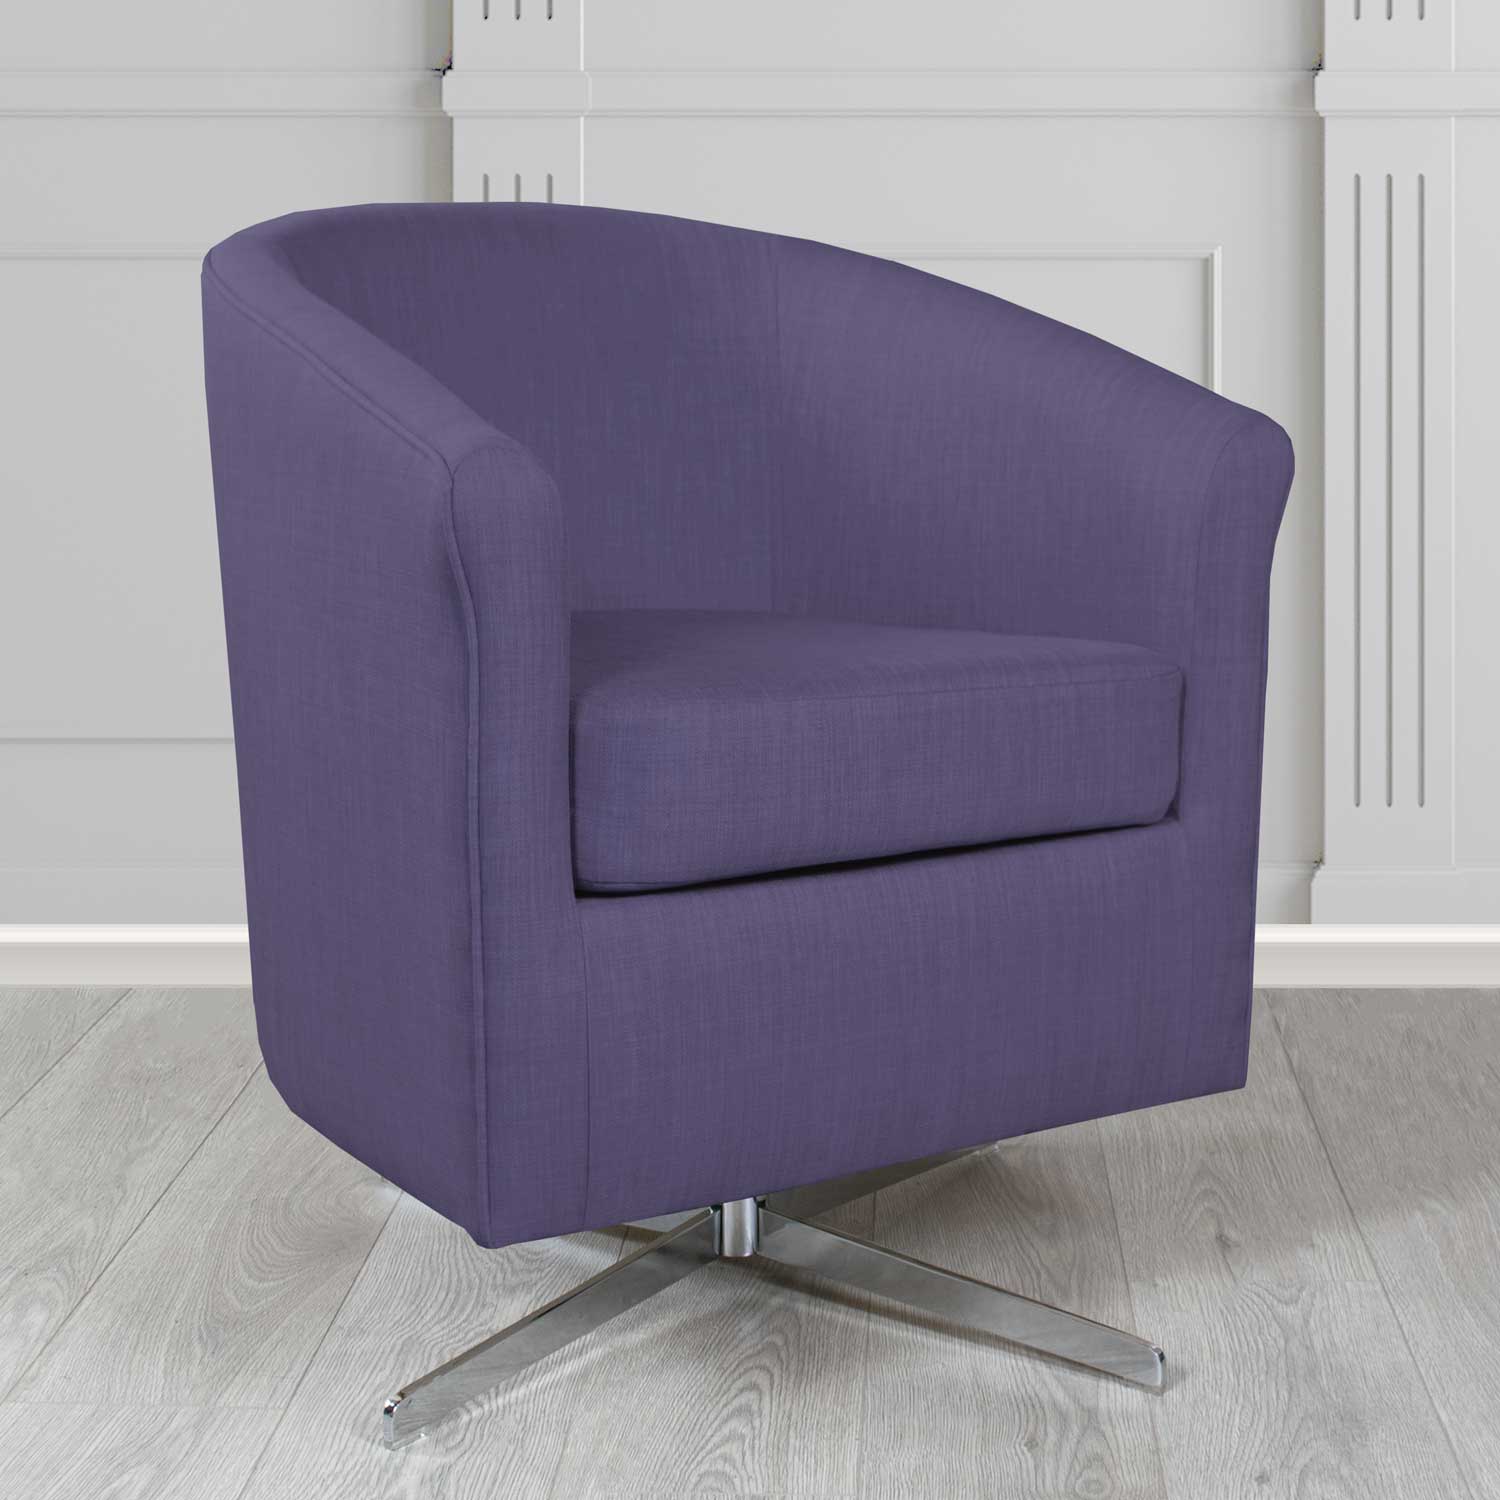 Cannes Charles Purple Linen Fabric Swivel Tub Chair - The Tub Chair Shop